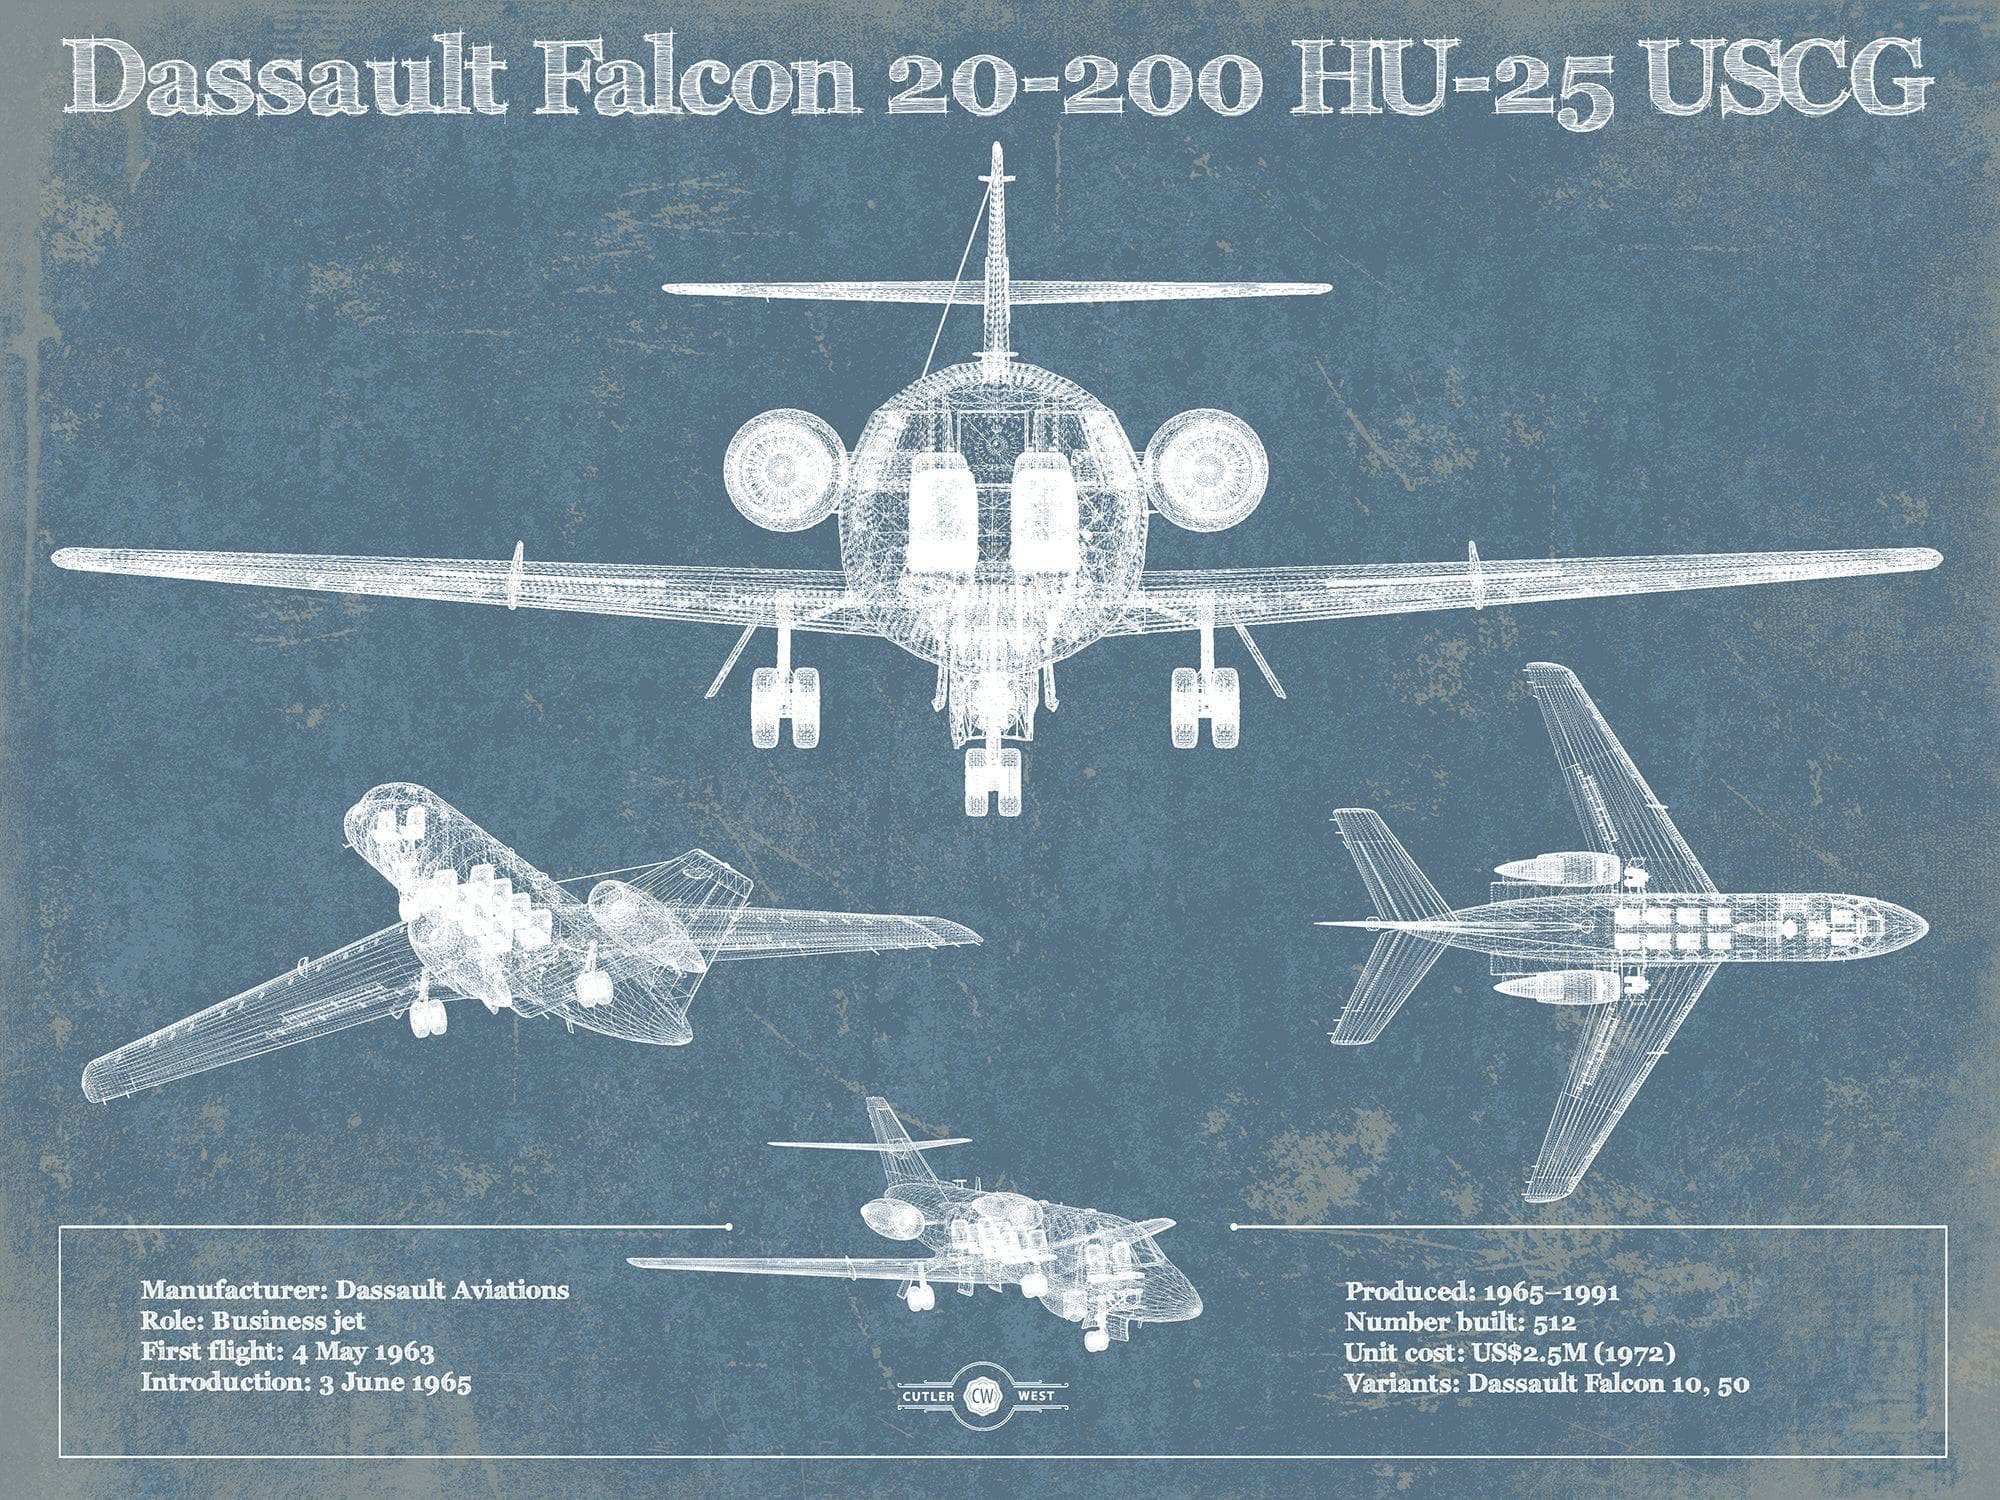 Cutler West Dassault Falcon 20-200 HU-25 USCG Vintage Aviation Blueprint Print - Custom Pilot Name can be Added